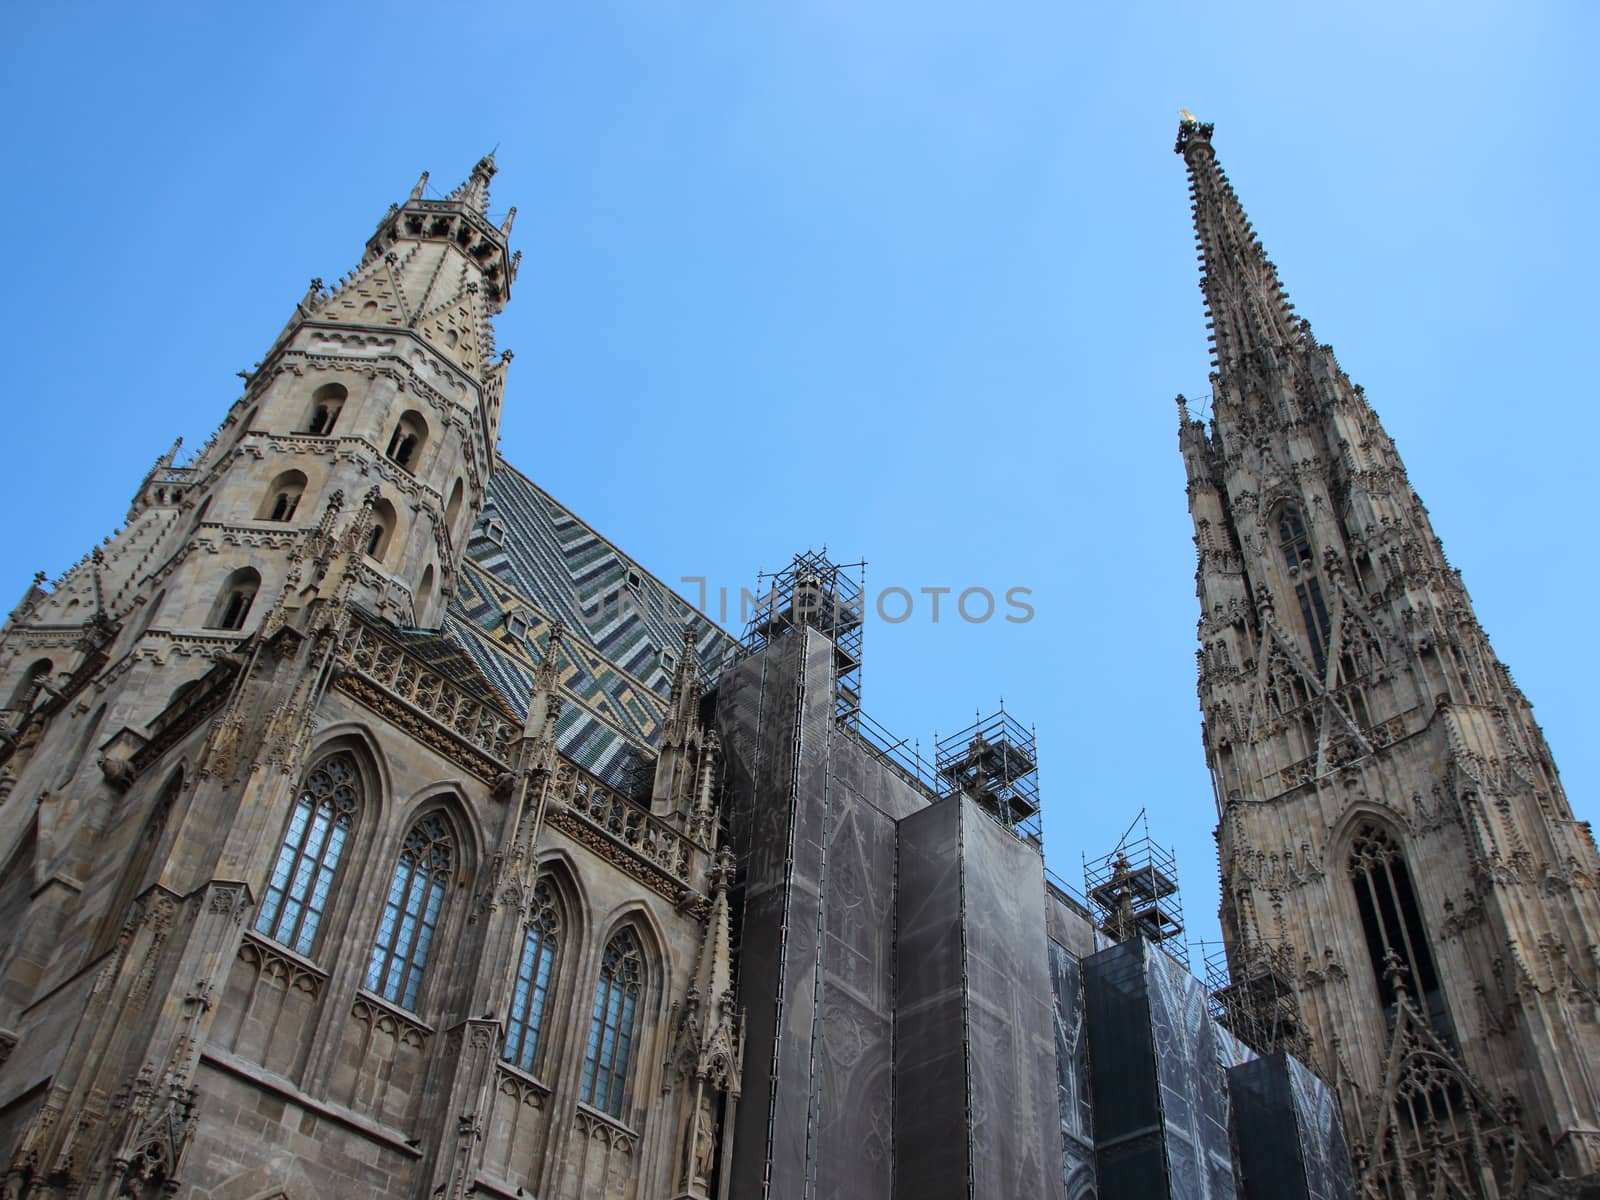 Stephansdom Church Landmark in Vienna Austria with Blue Sky by HoleInTheBox